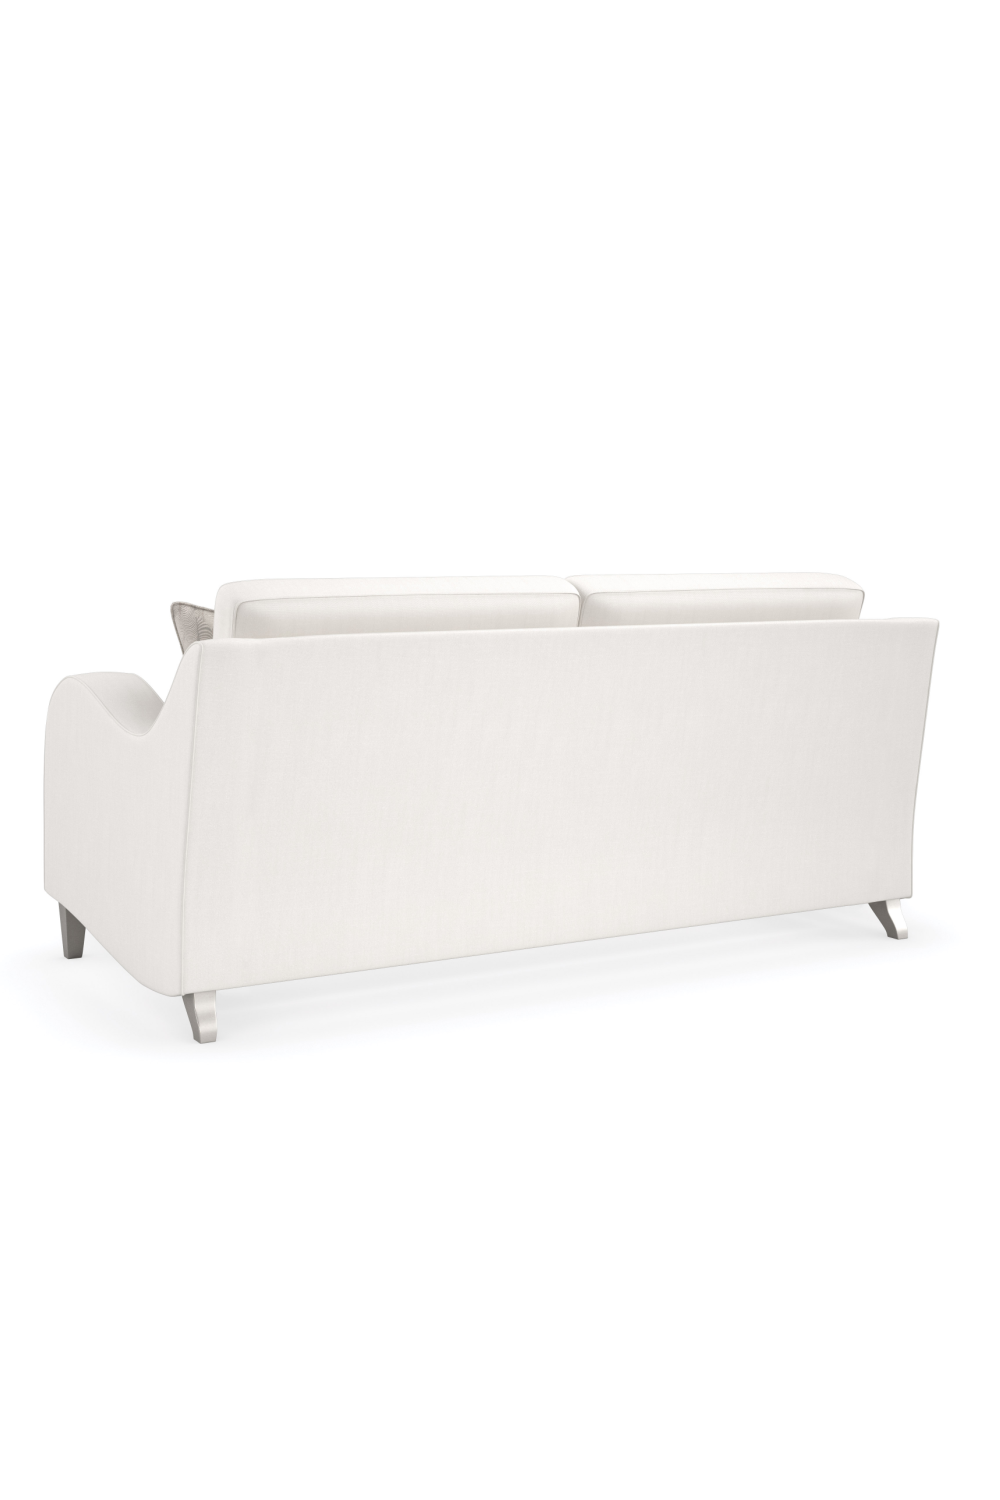 White Modern Classic Sofa | Caracole Victoria | Oroa.com